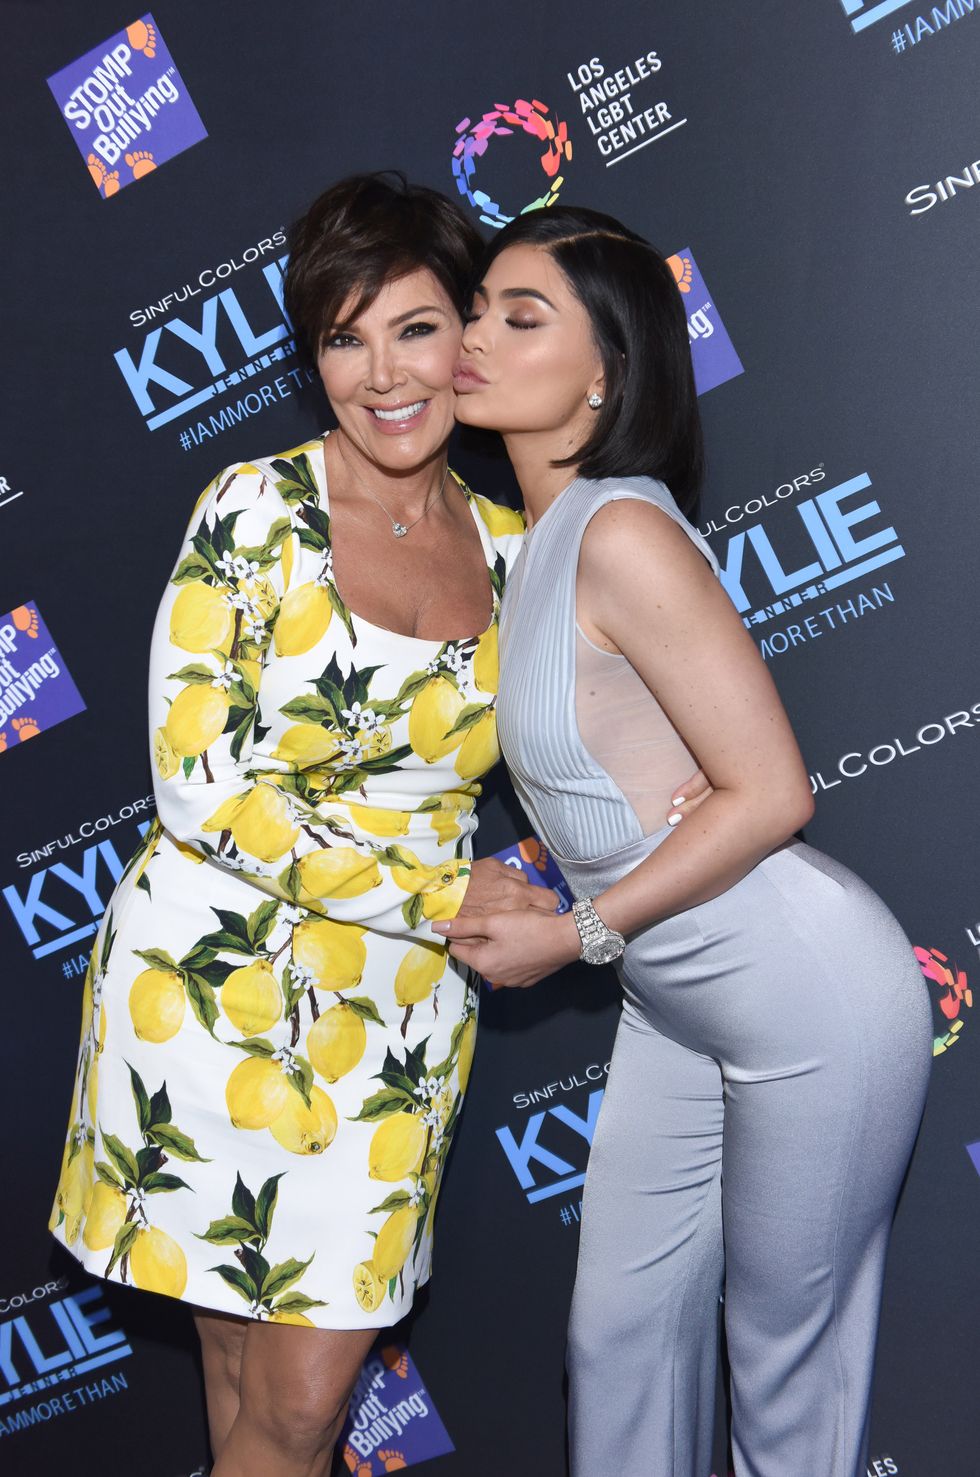 Kylie Jenner Checks Out 'Jurassic World' With Boyfriend Tyga